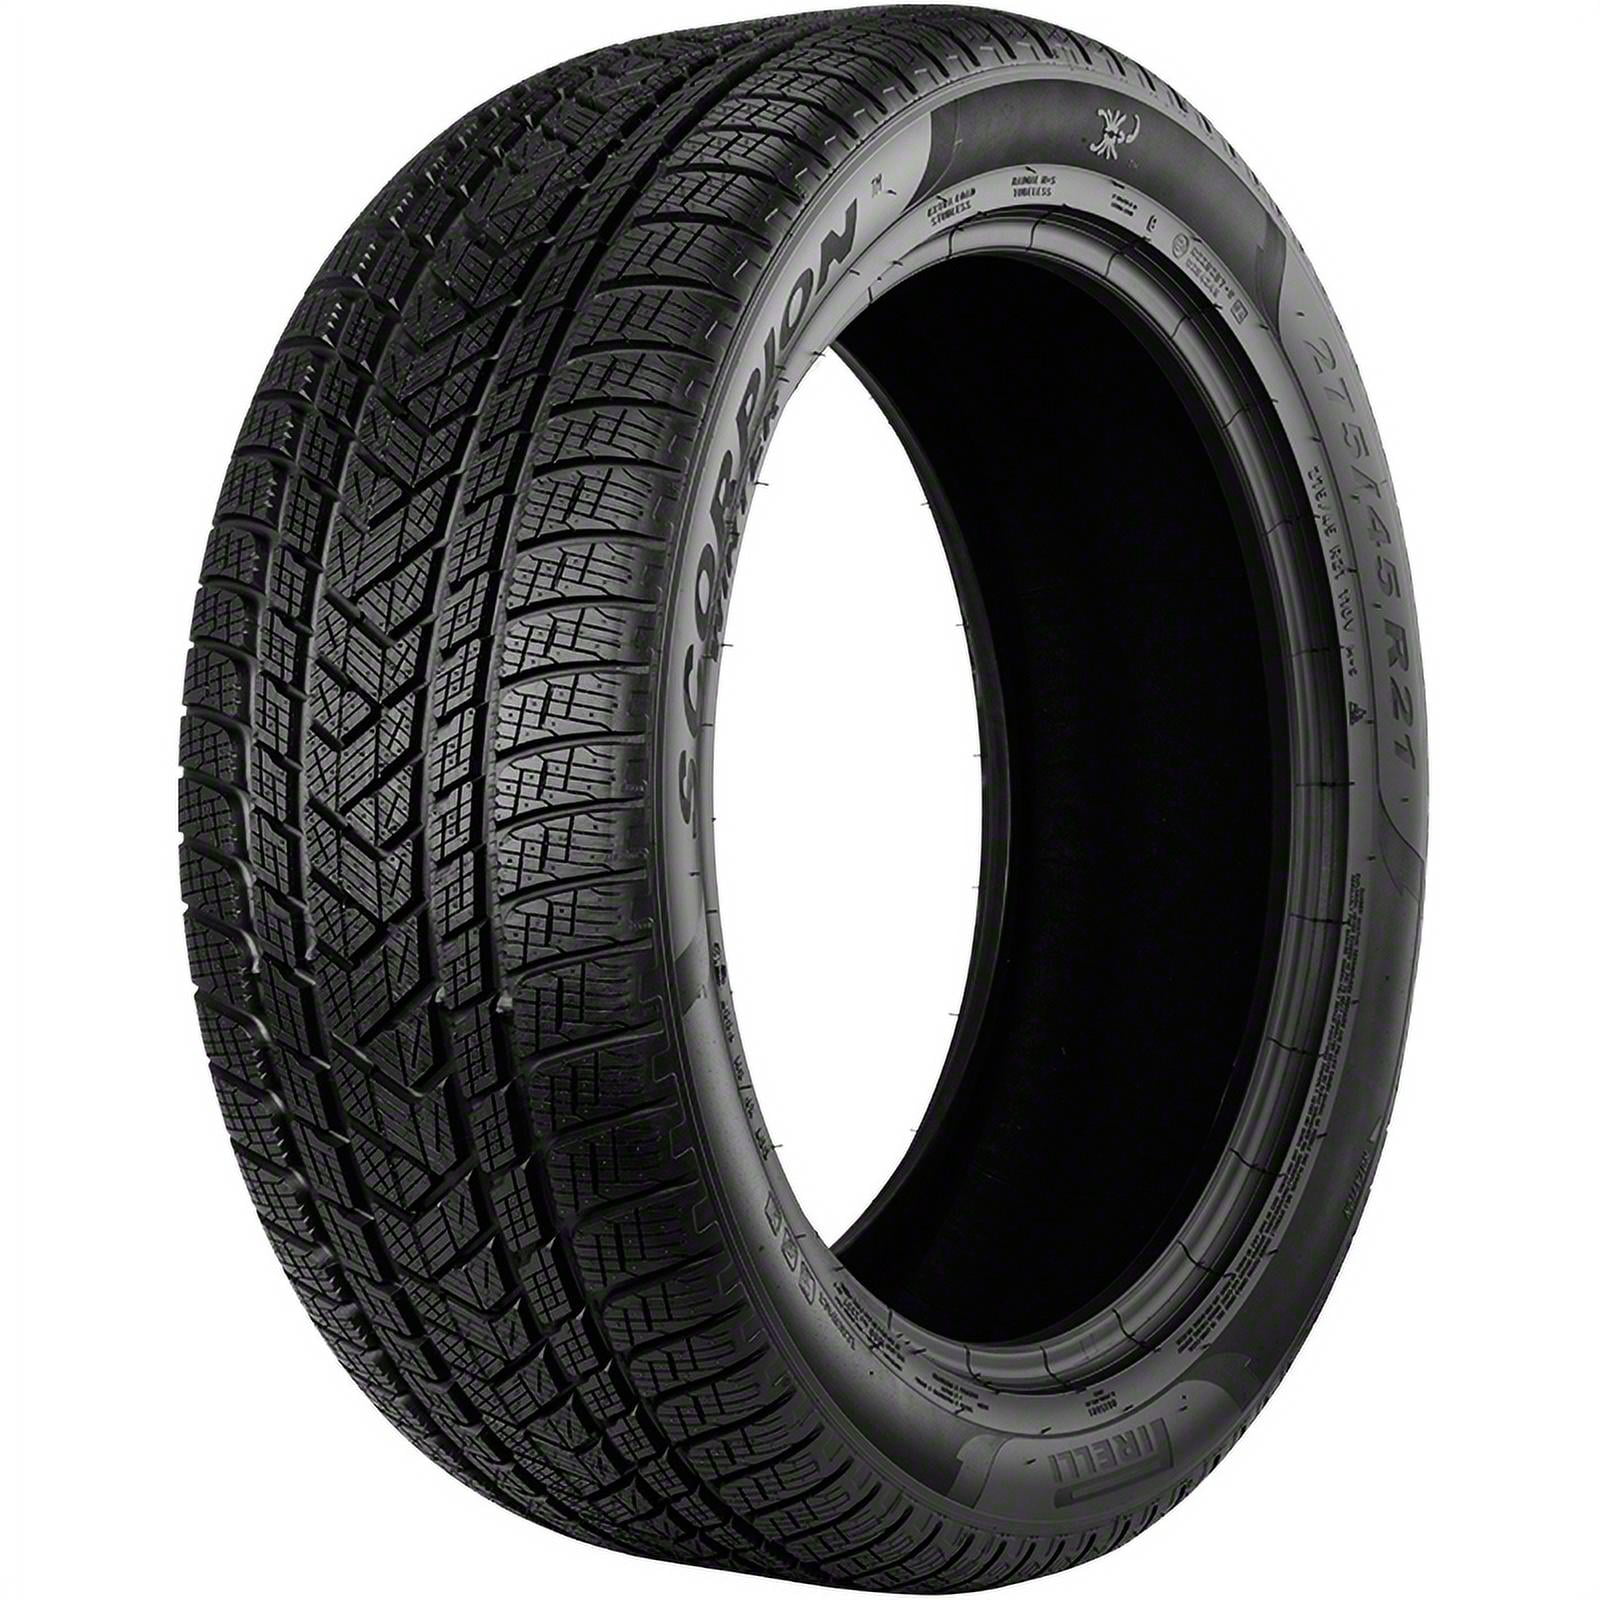 Pirelli Scorpion Winter Winter 235/55R18 104H XL Passenger Tire